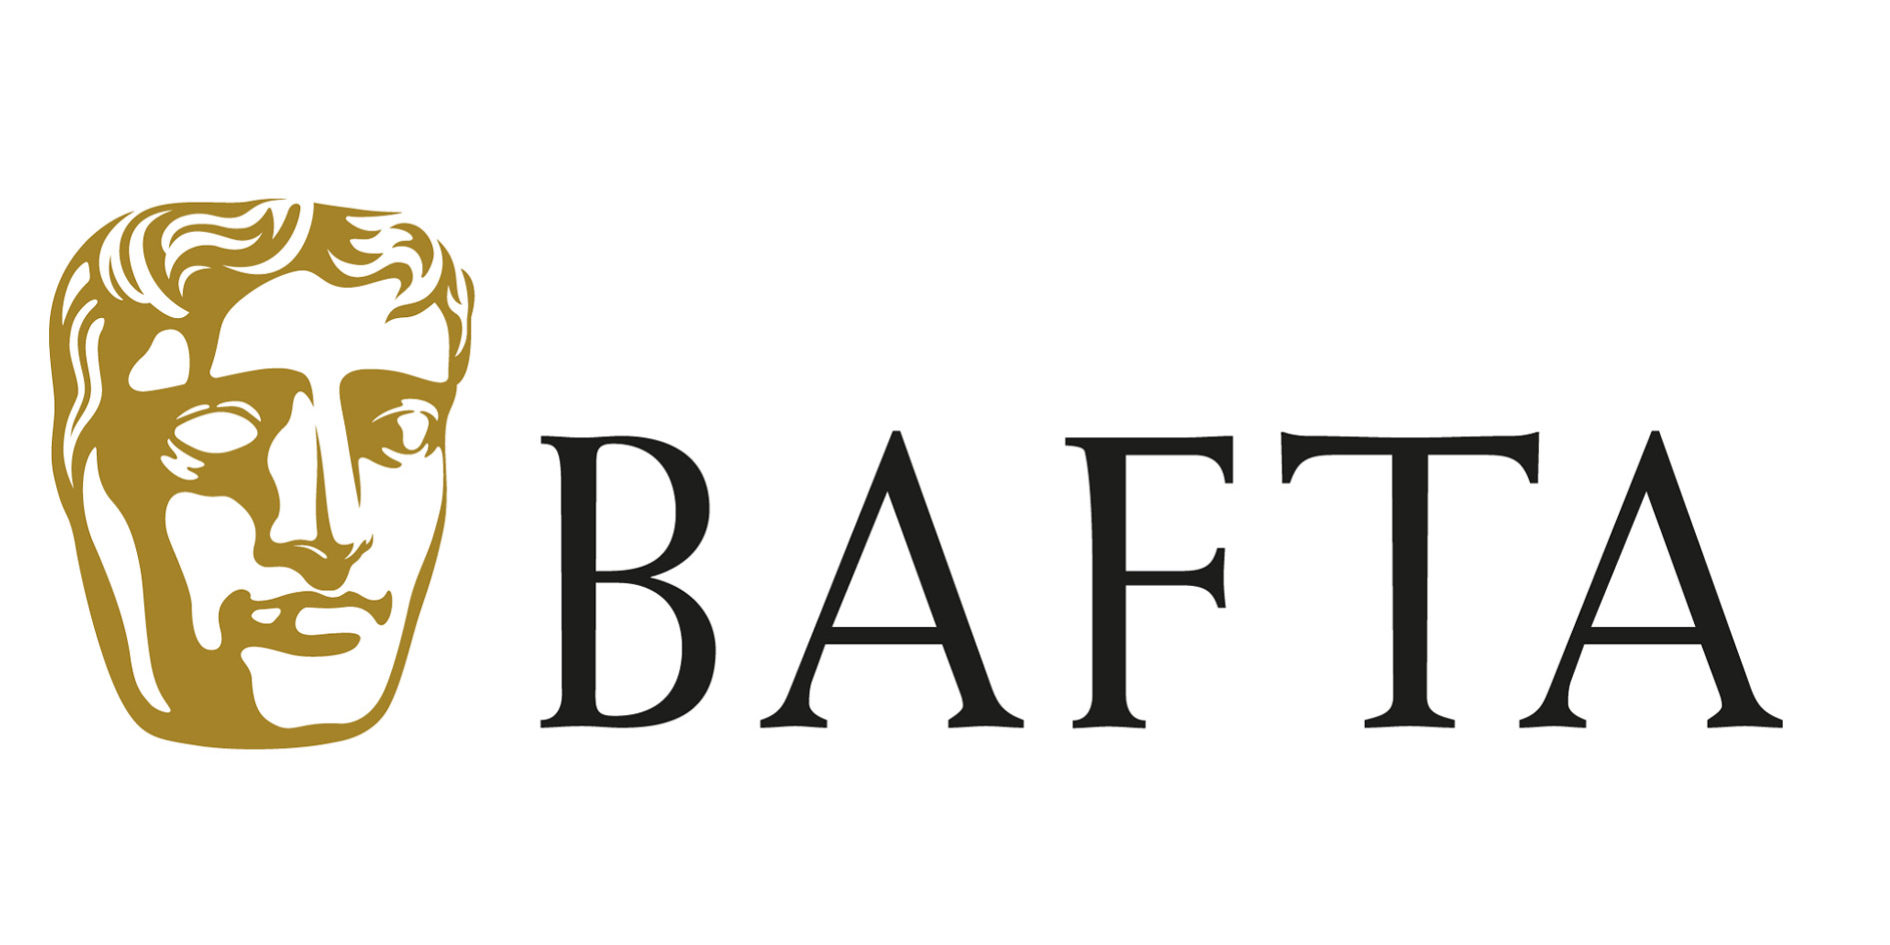 baftatest-1890x945.jpg